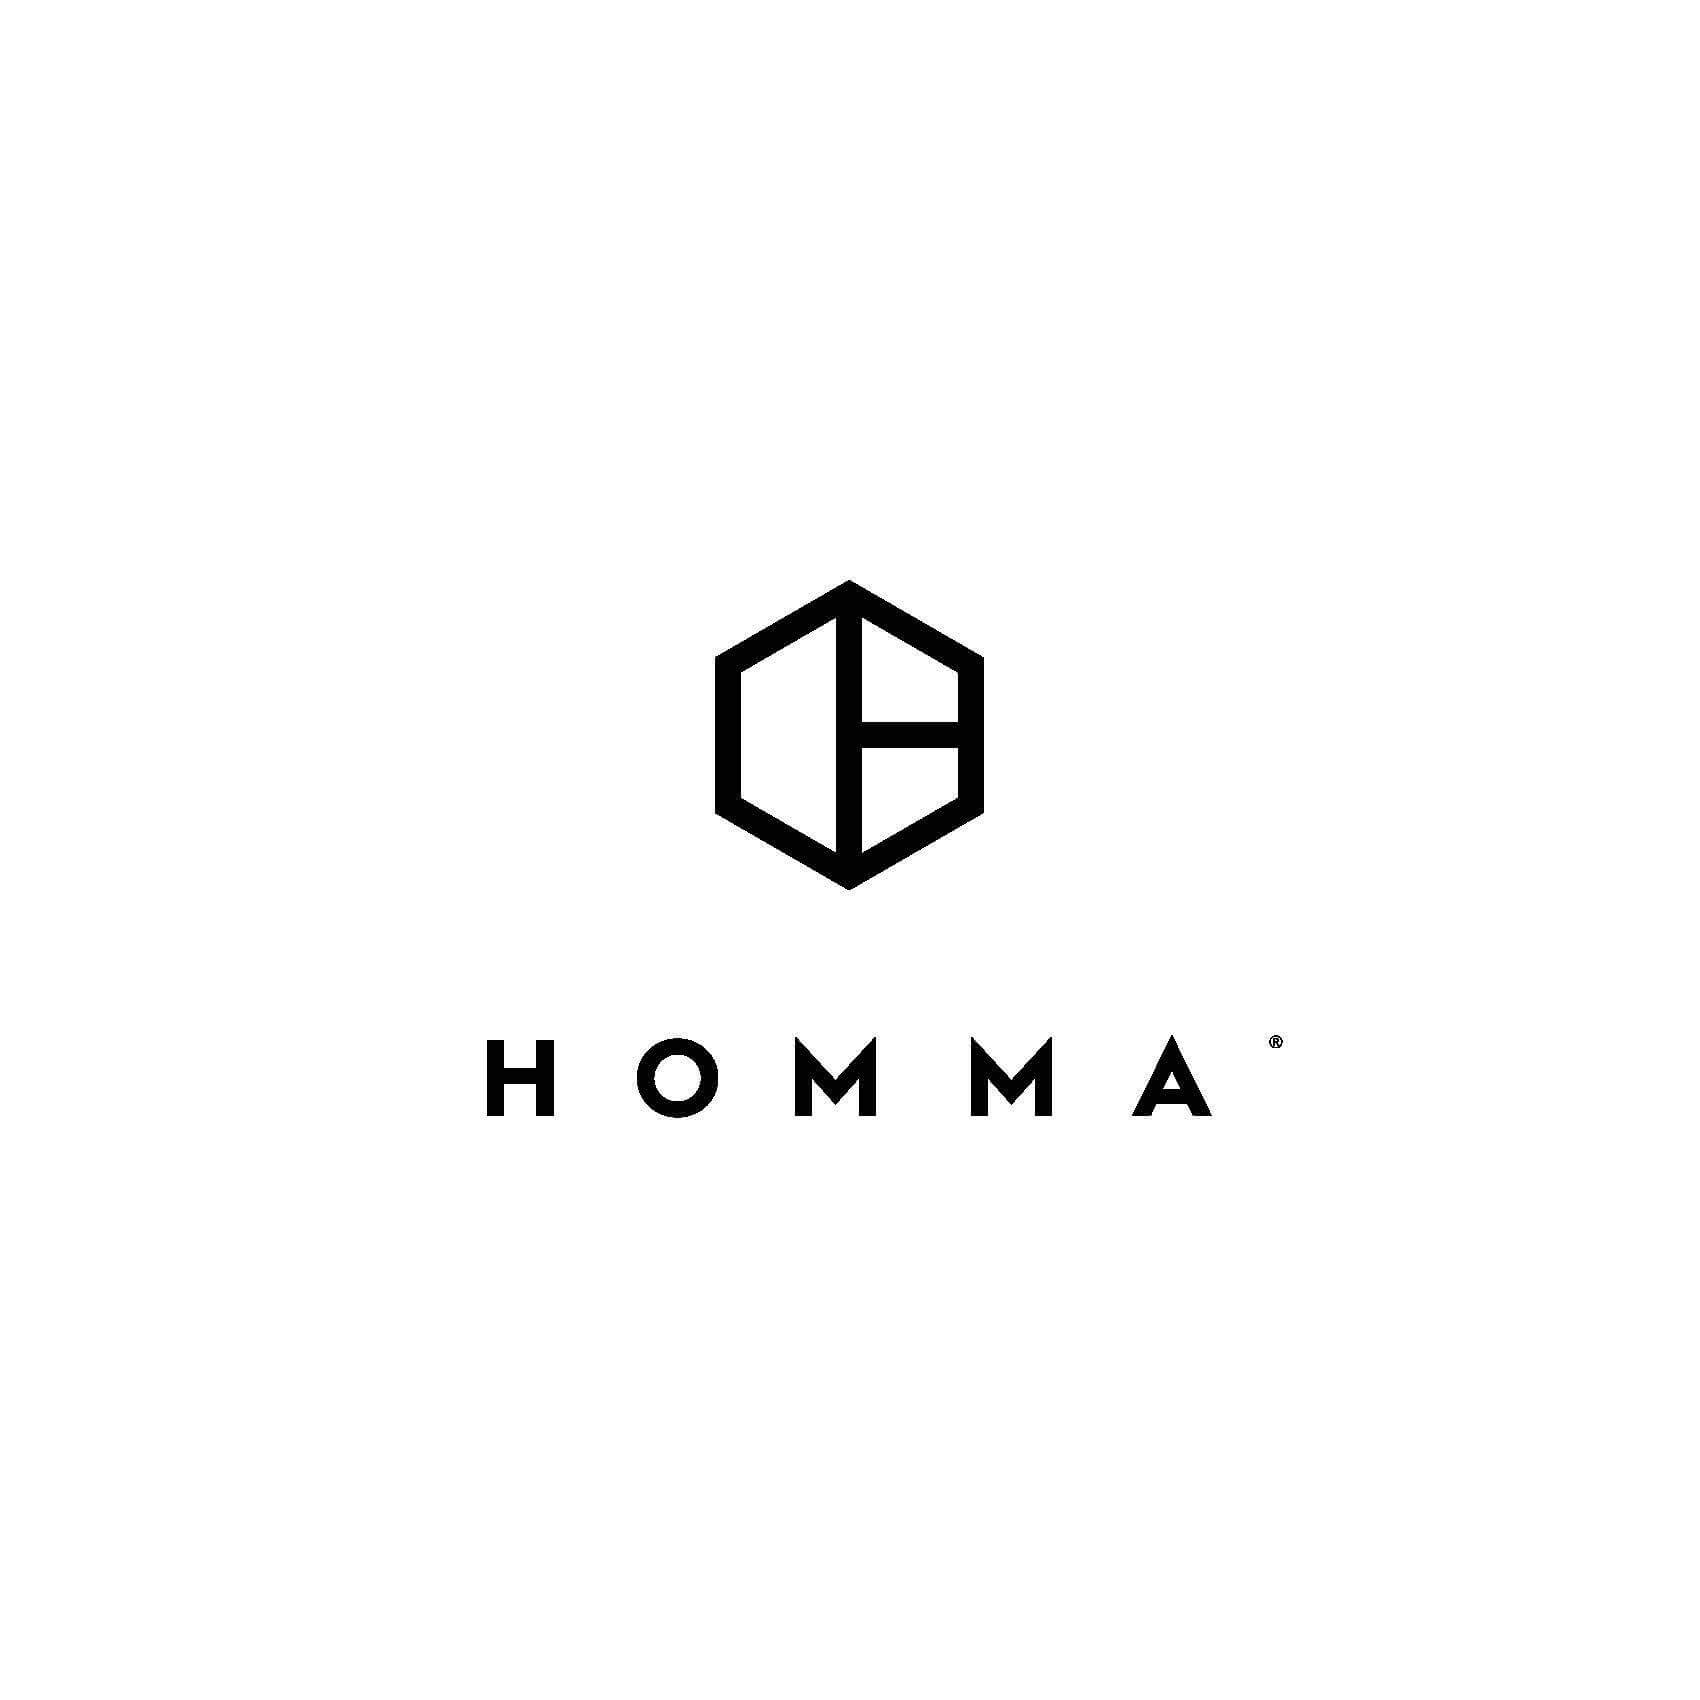 HOMMA, Inc.